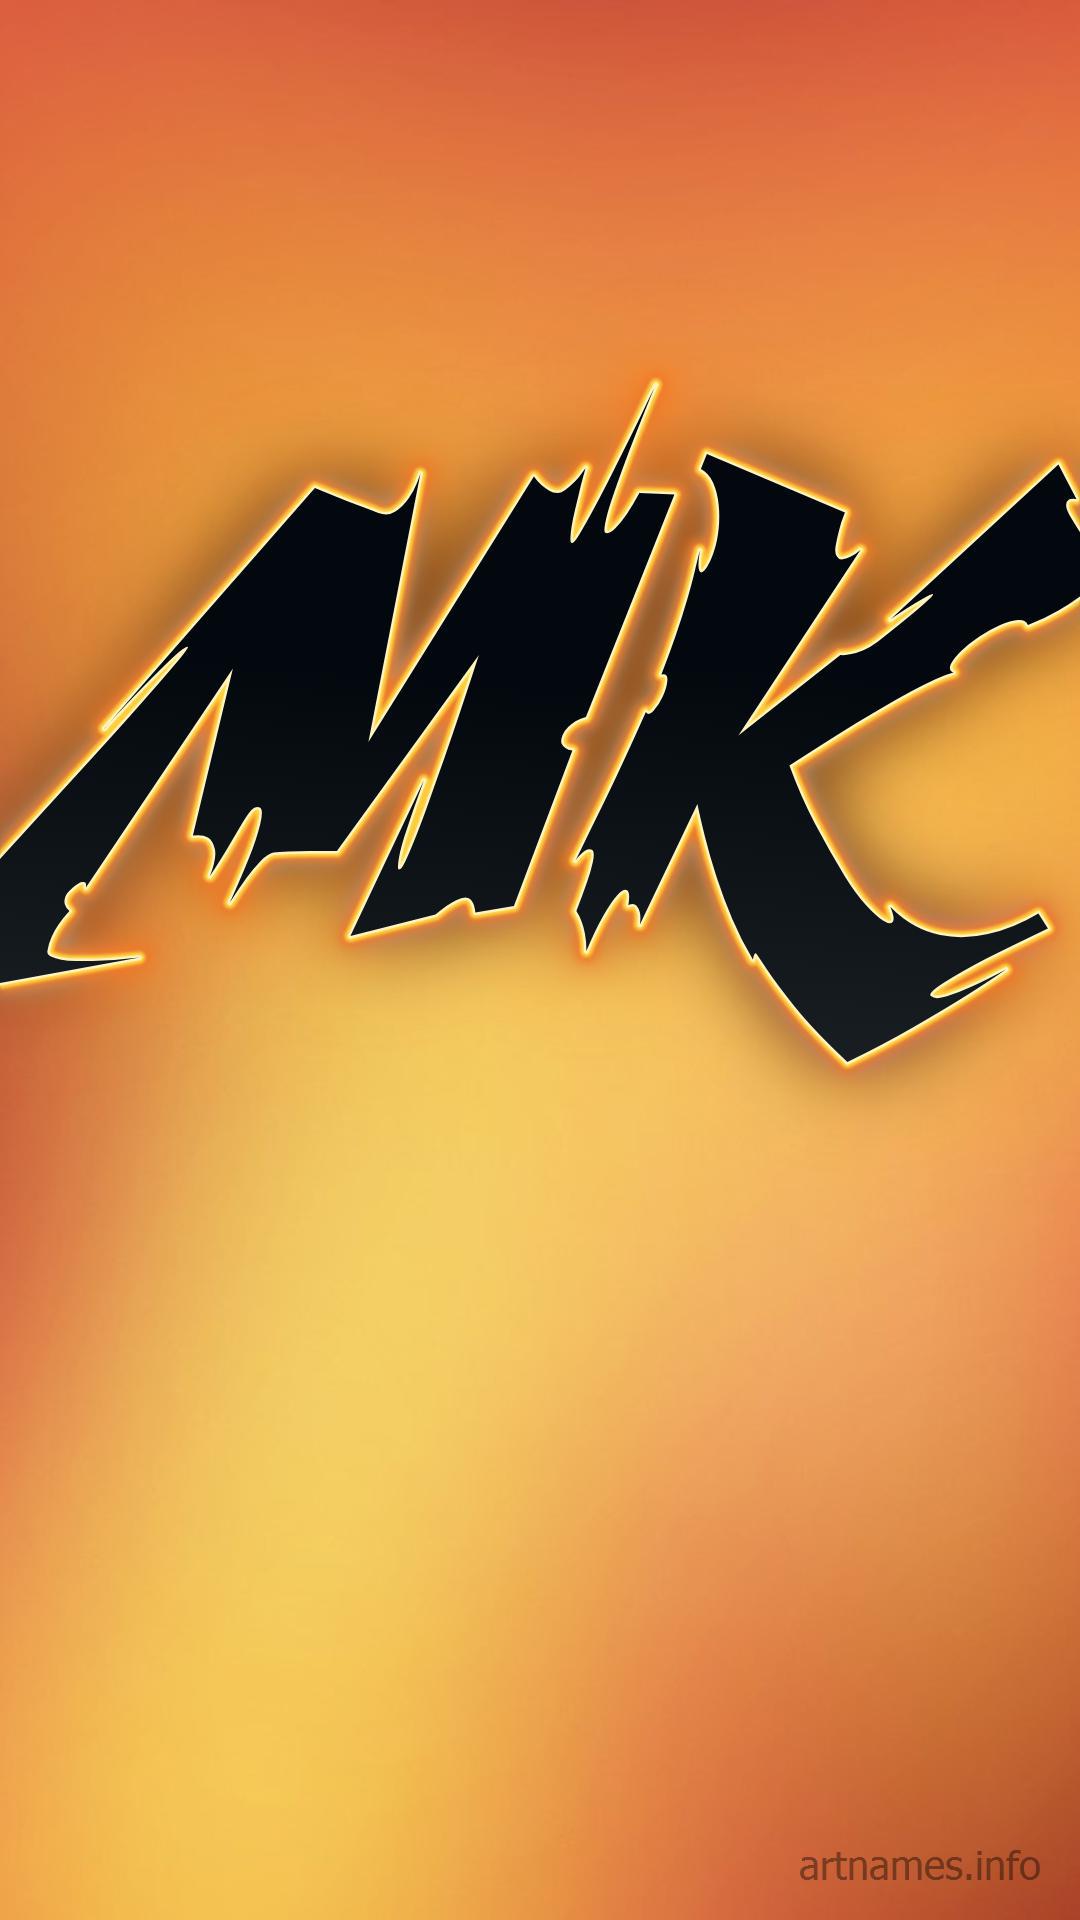 Mk As A Art Name Wallpaper Artnames